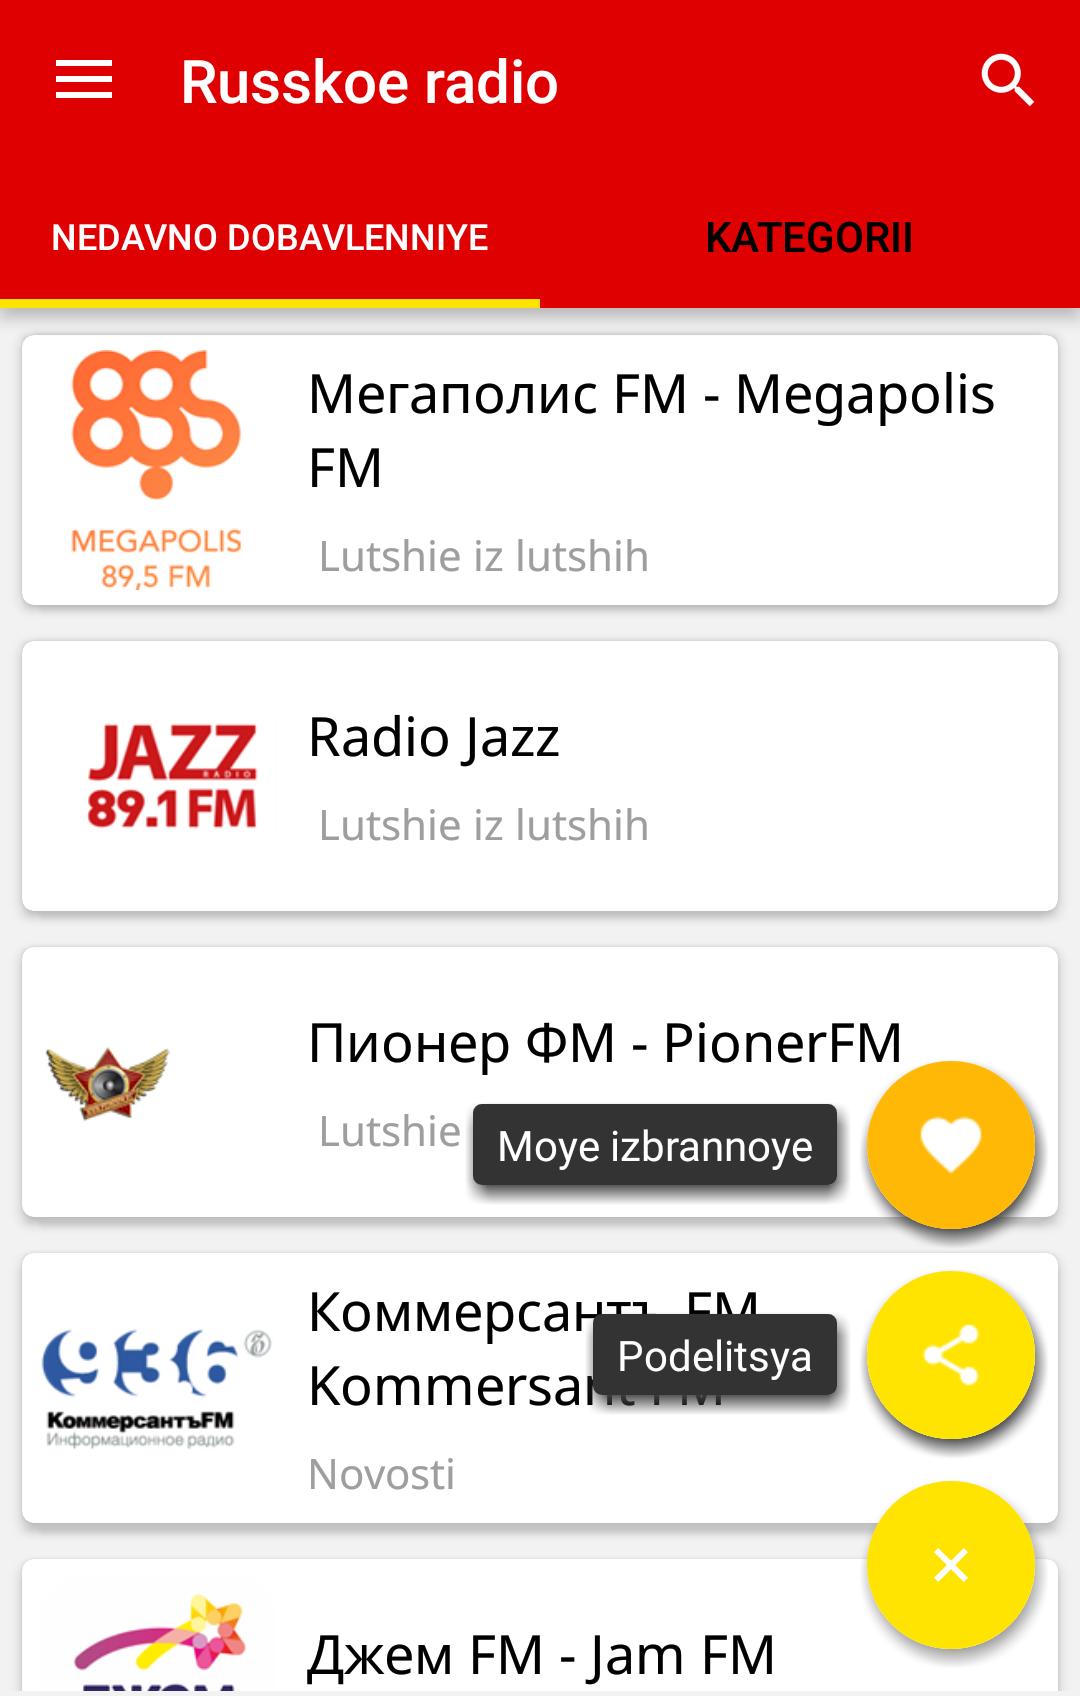 Russkoe radio - Radio ru for Android - APK Download